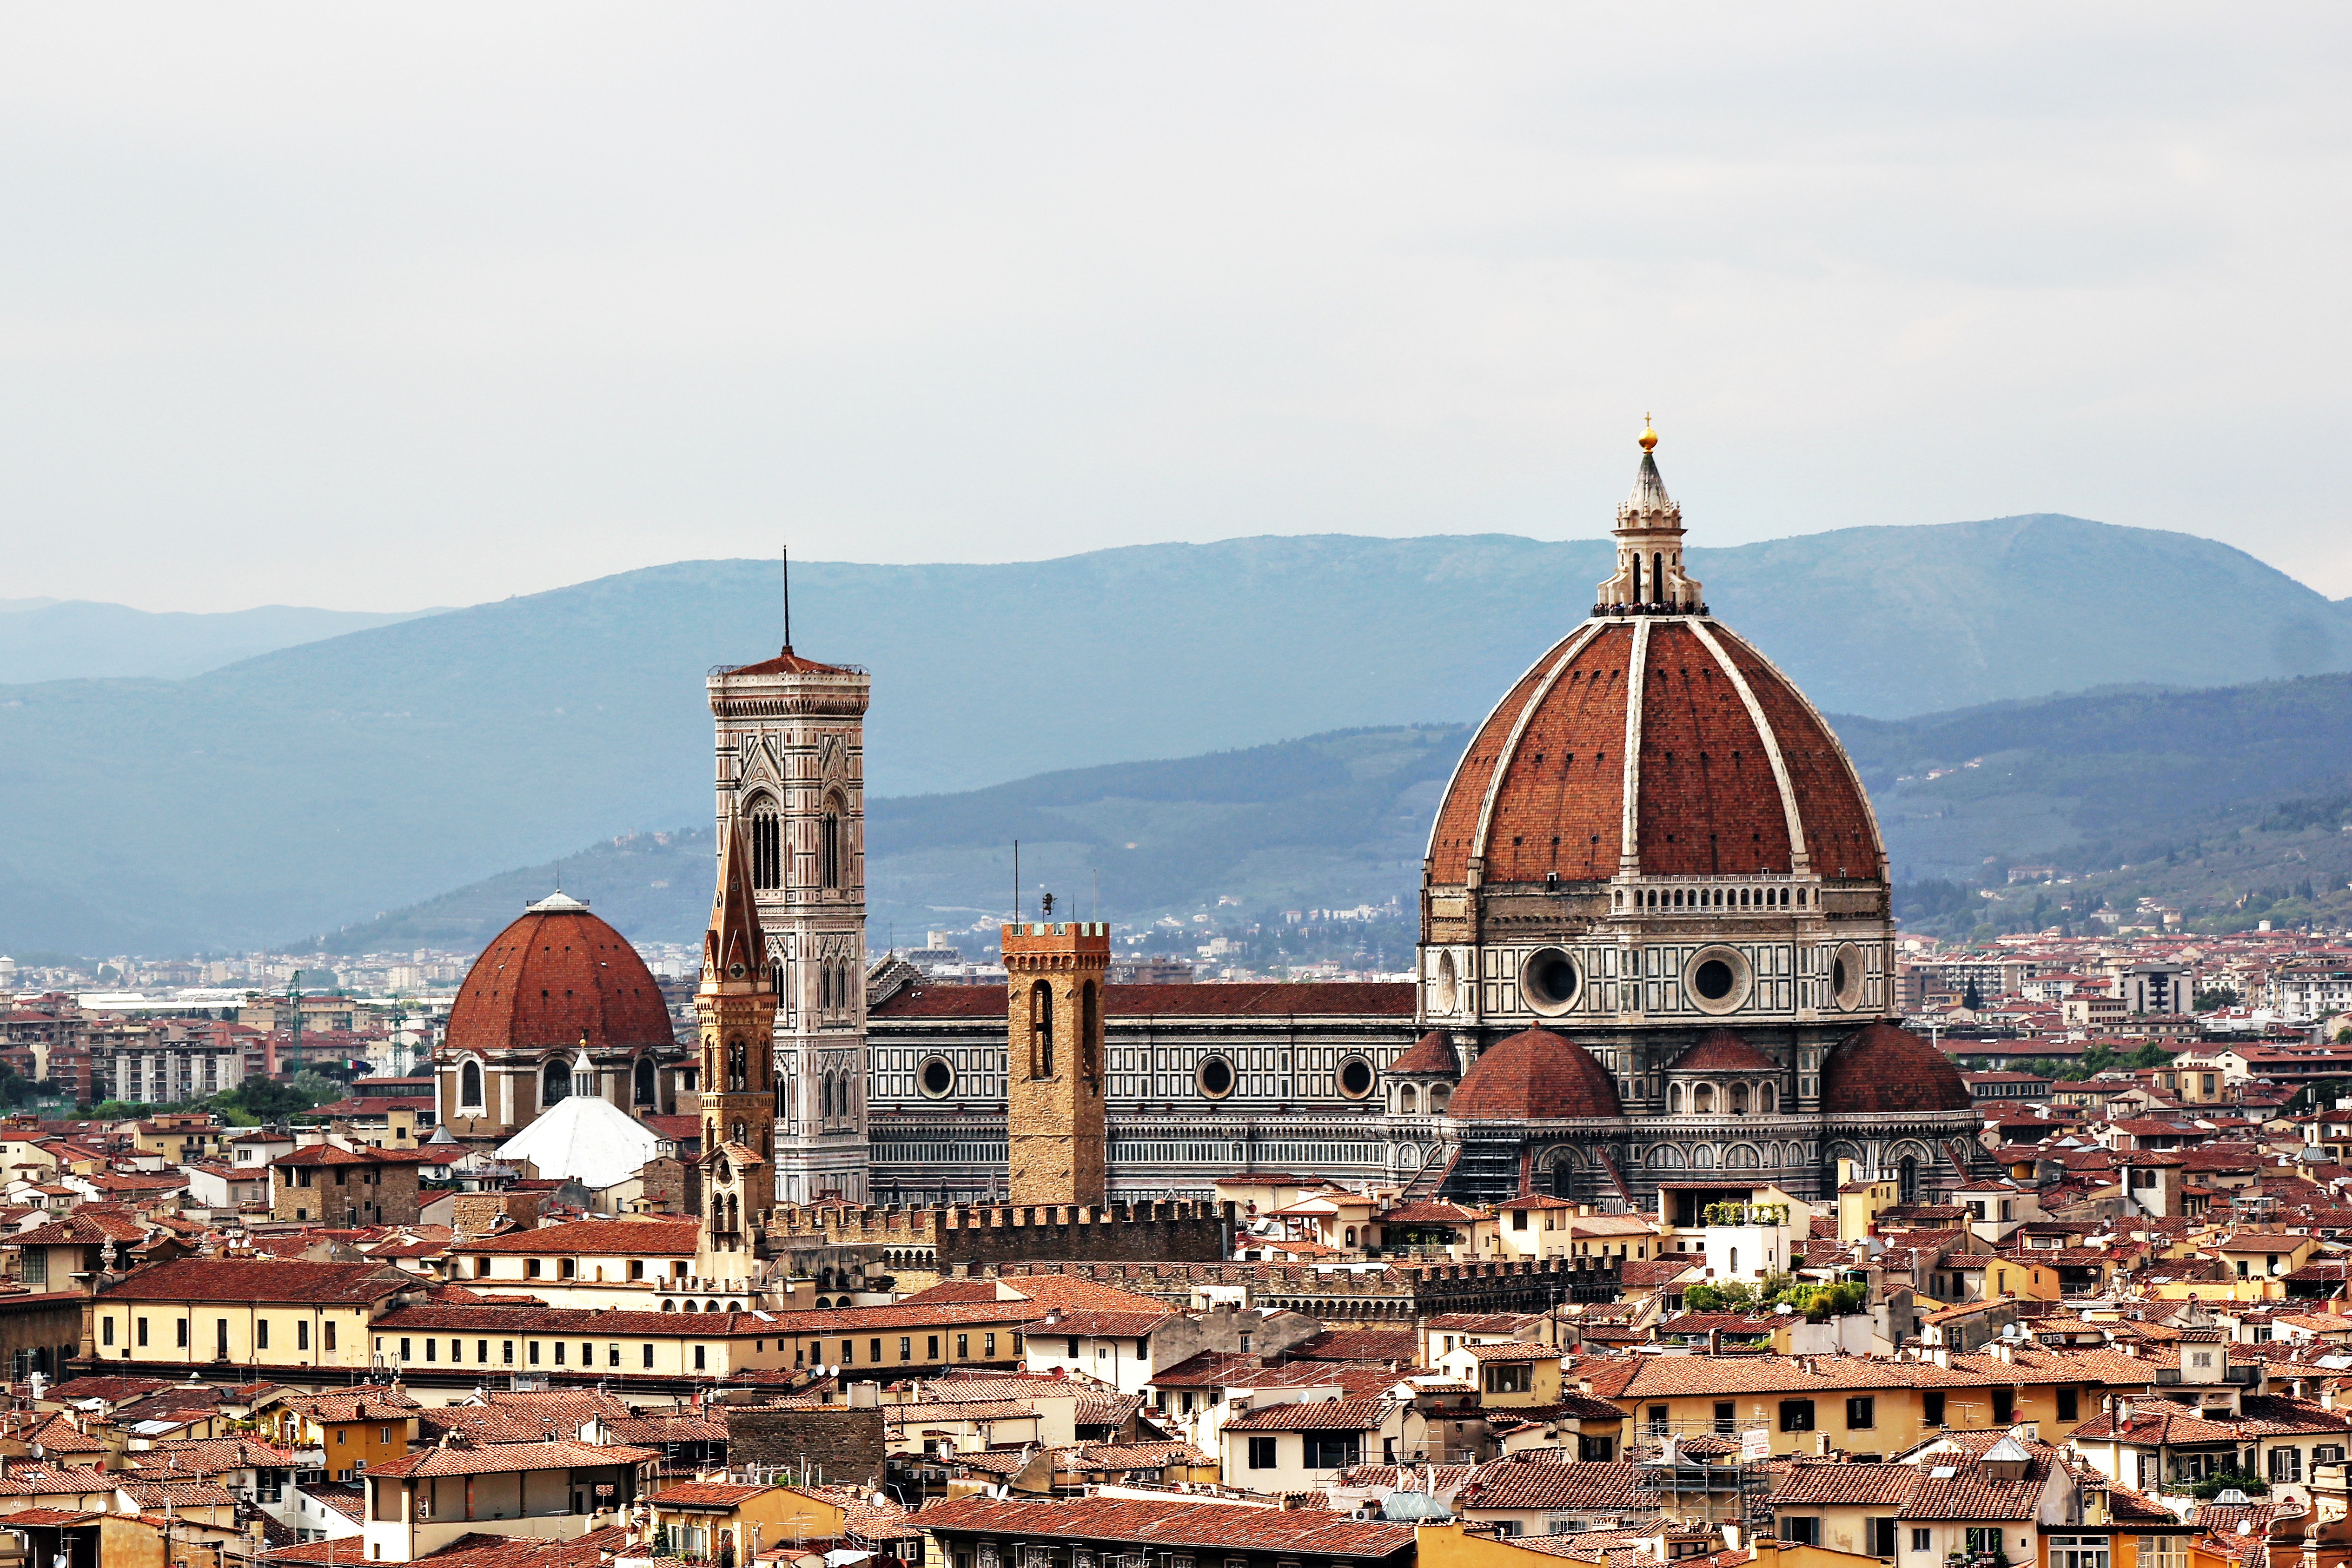 Firenze - overtouristy